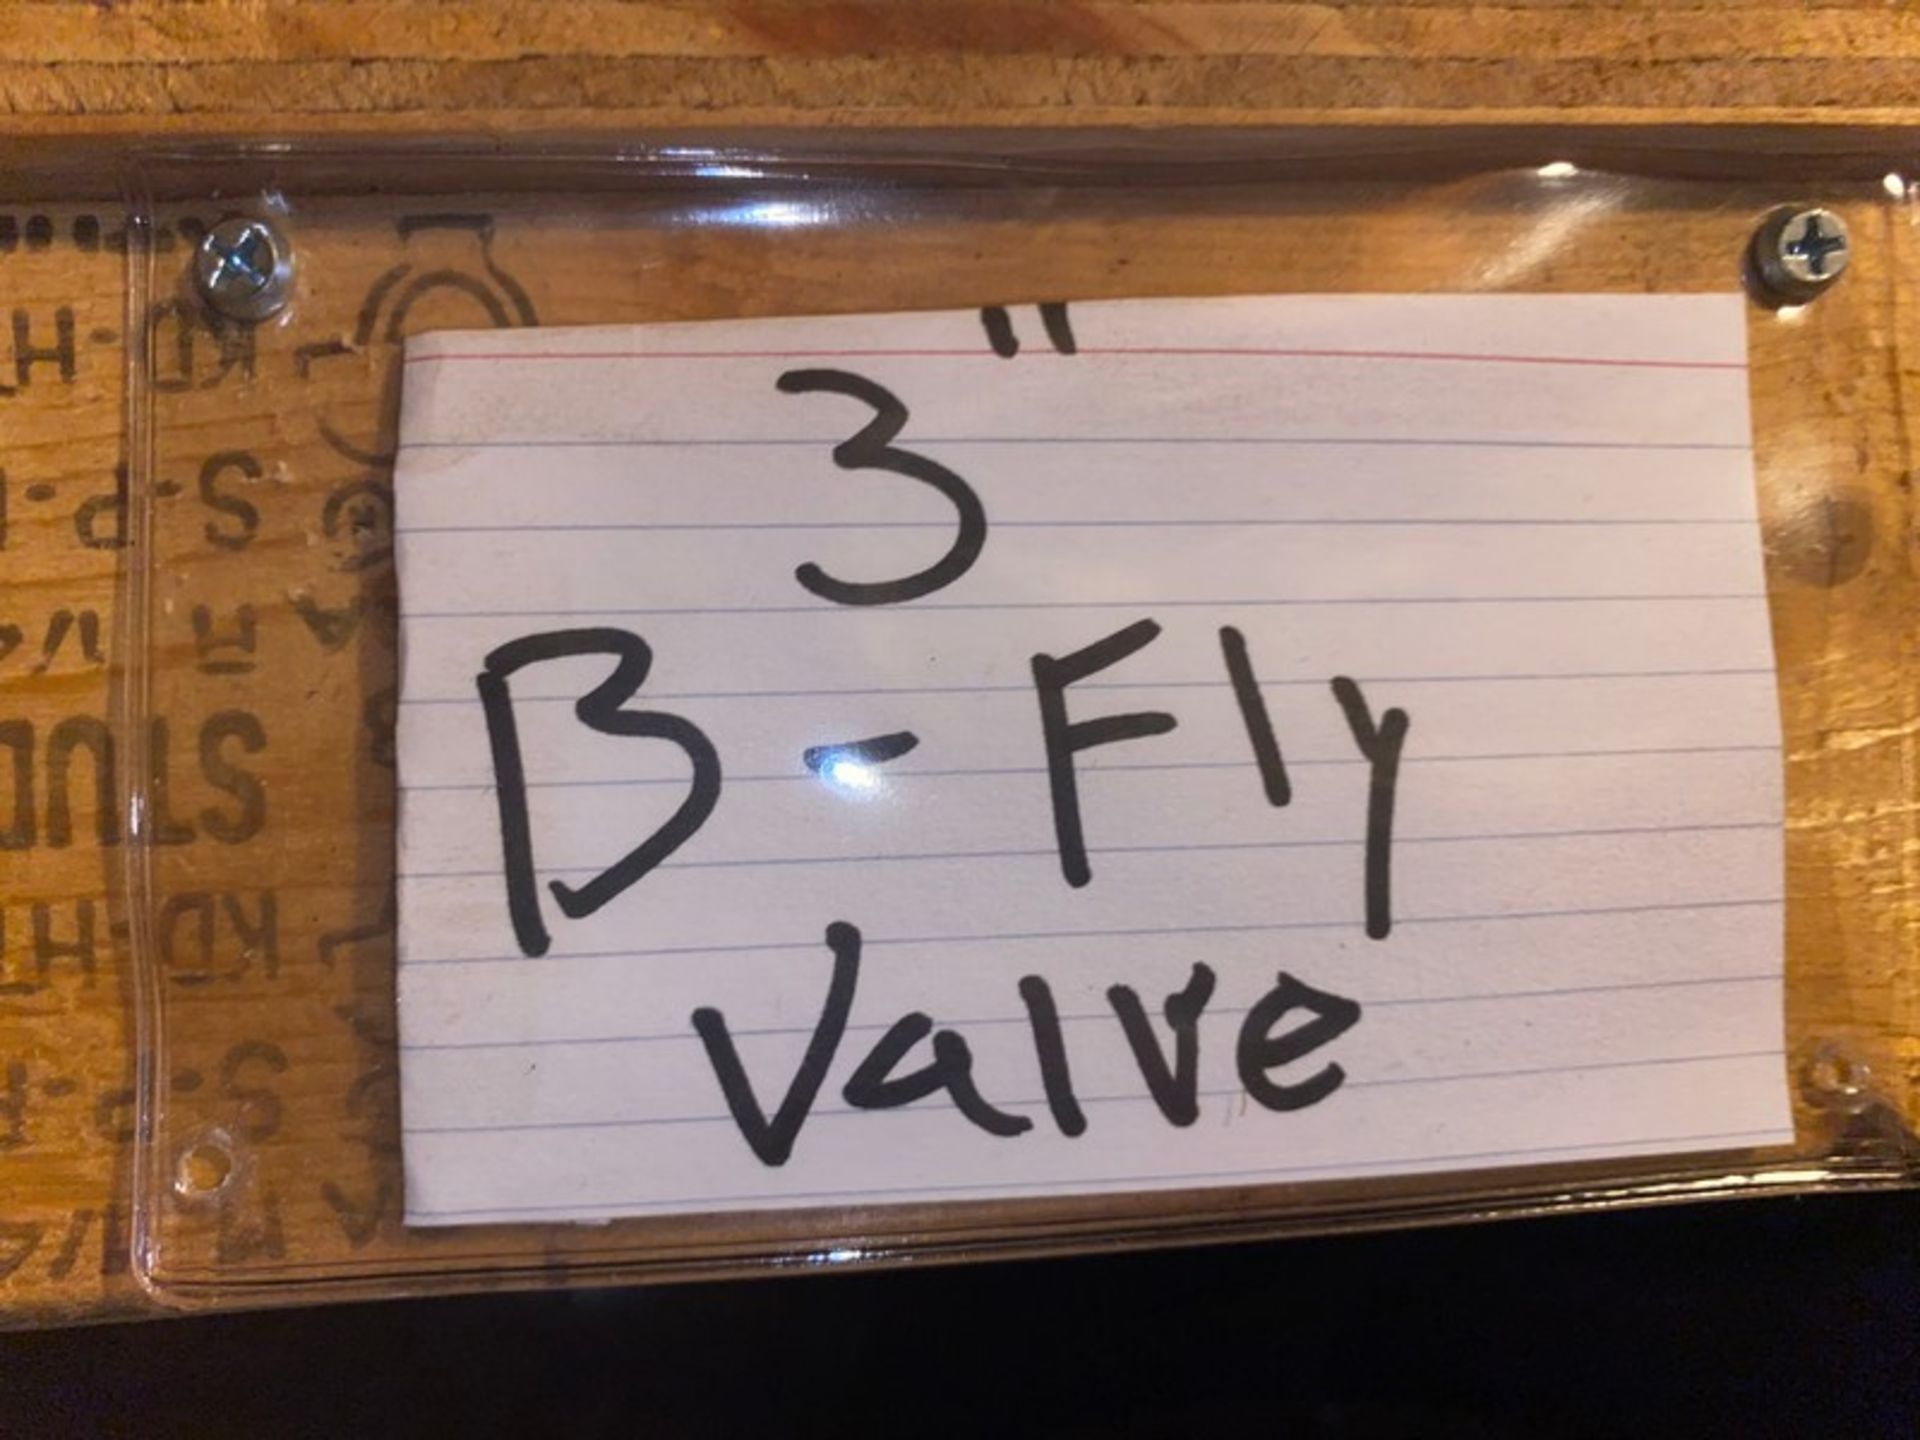 2 1/2 B-Fly Valve3” B-Fly Valve4” B-Fly Valve5” B-Fly Valve6” Butterfly Valve2” Groved Valve3” - Bild 5 aus 6